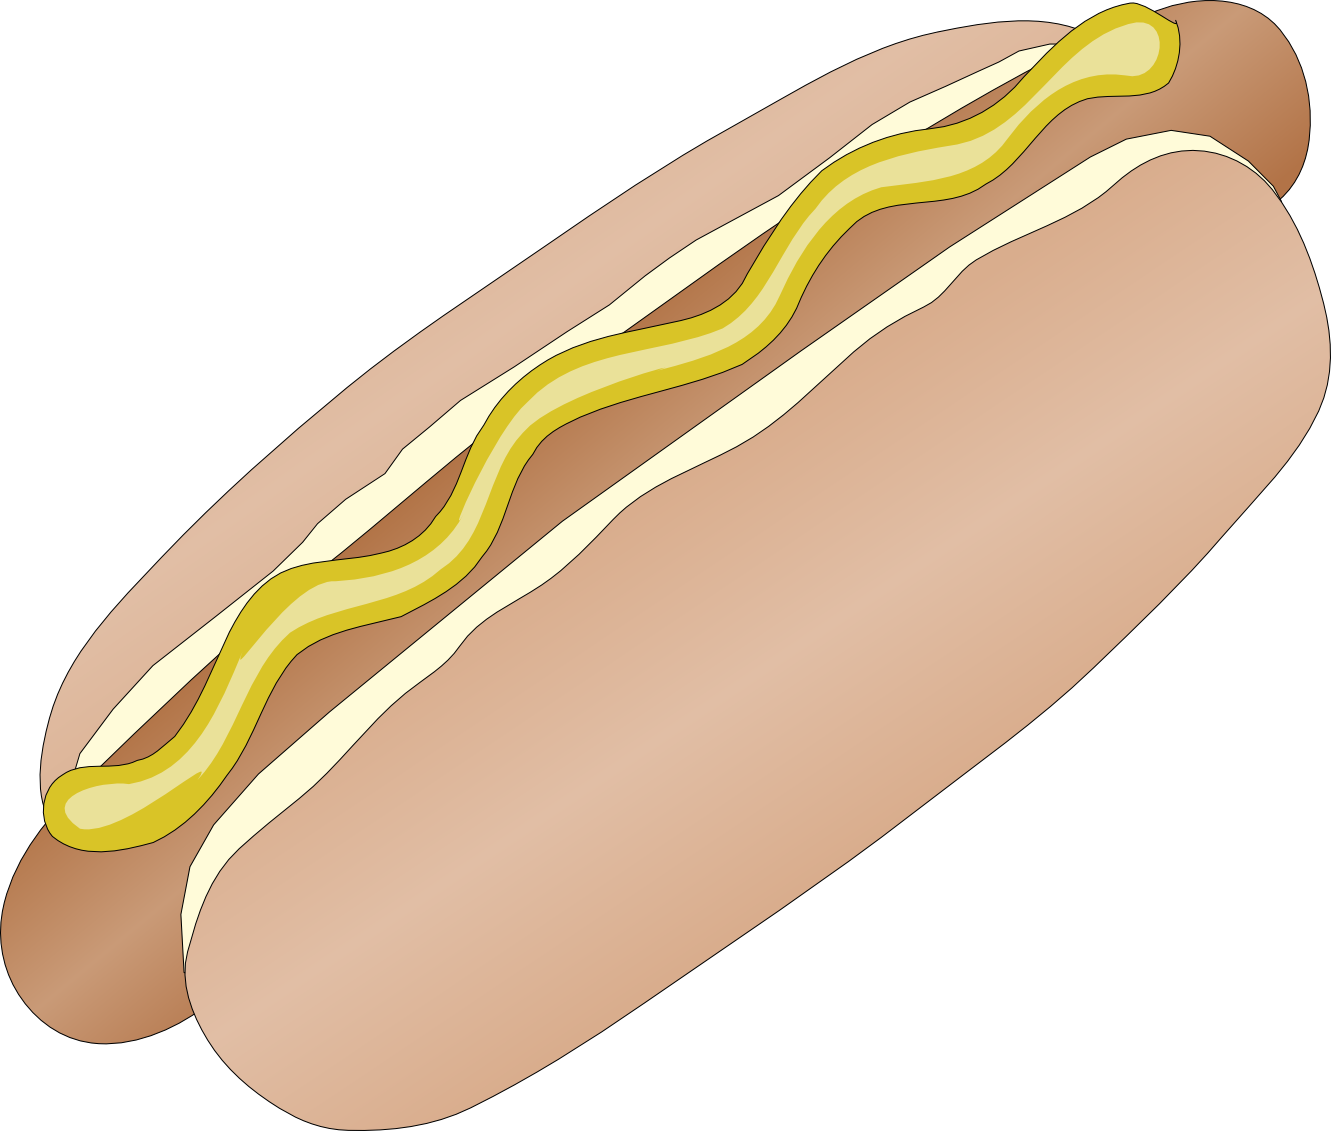 Hot Dog October 2011